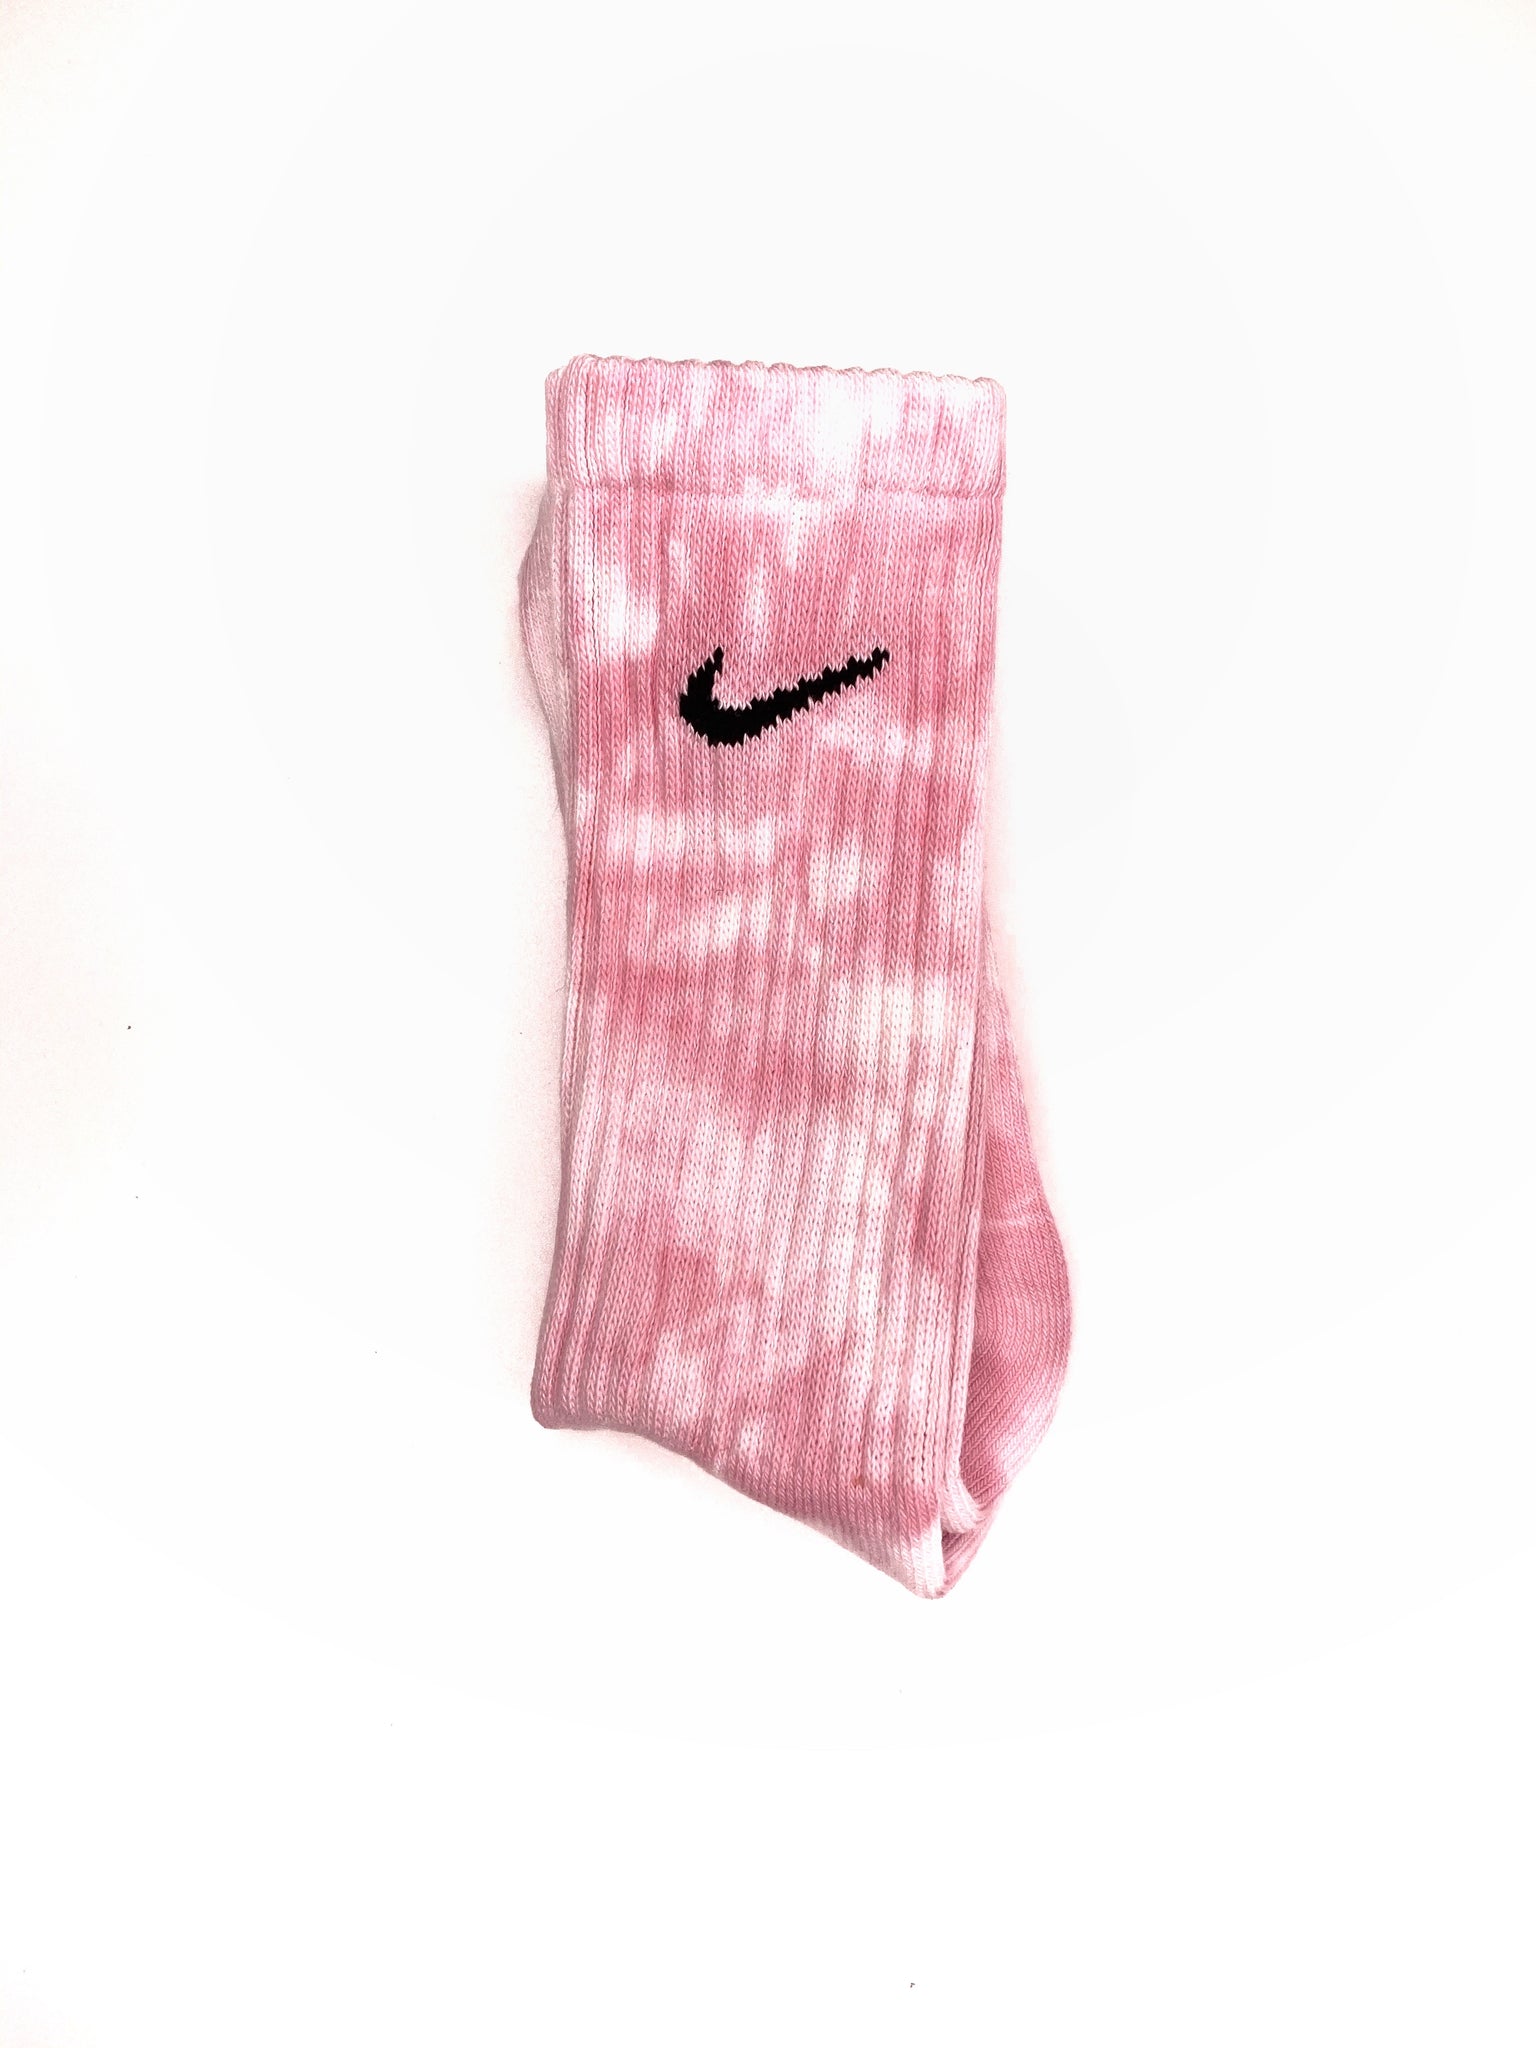 nike socks pink tick